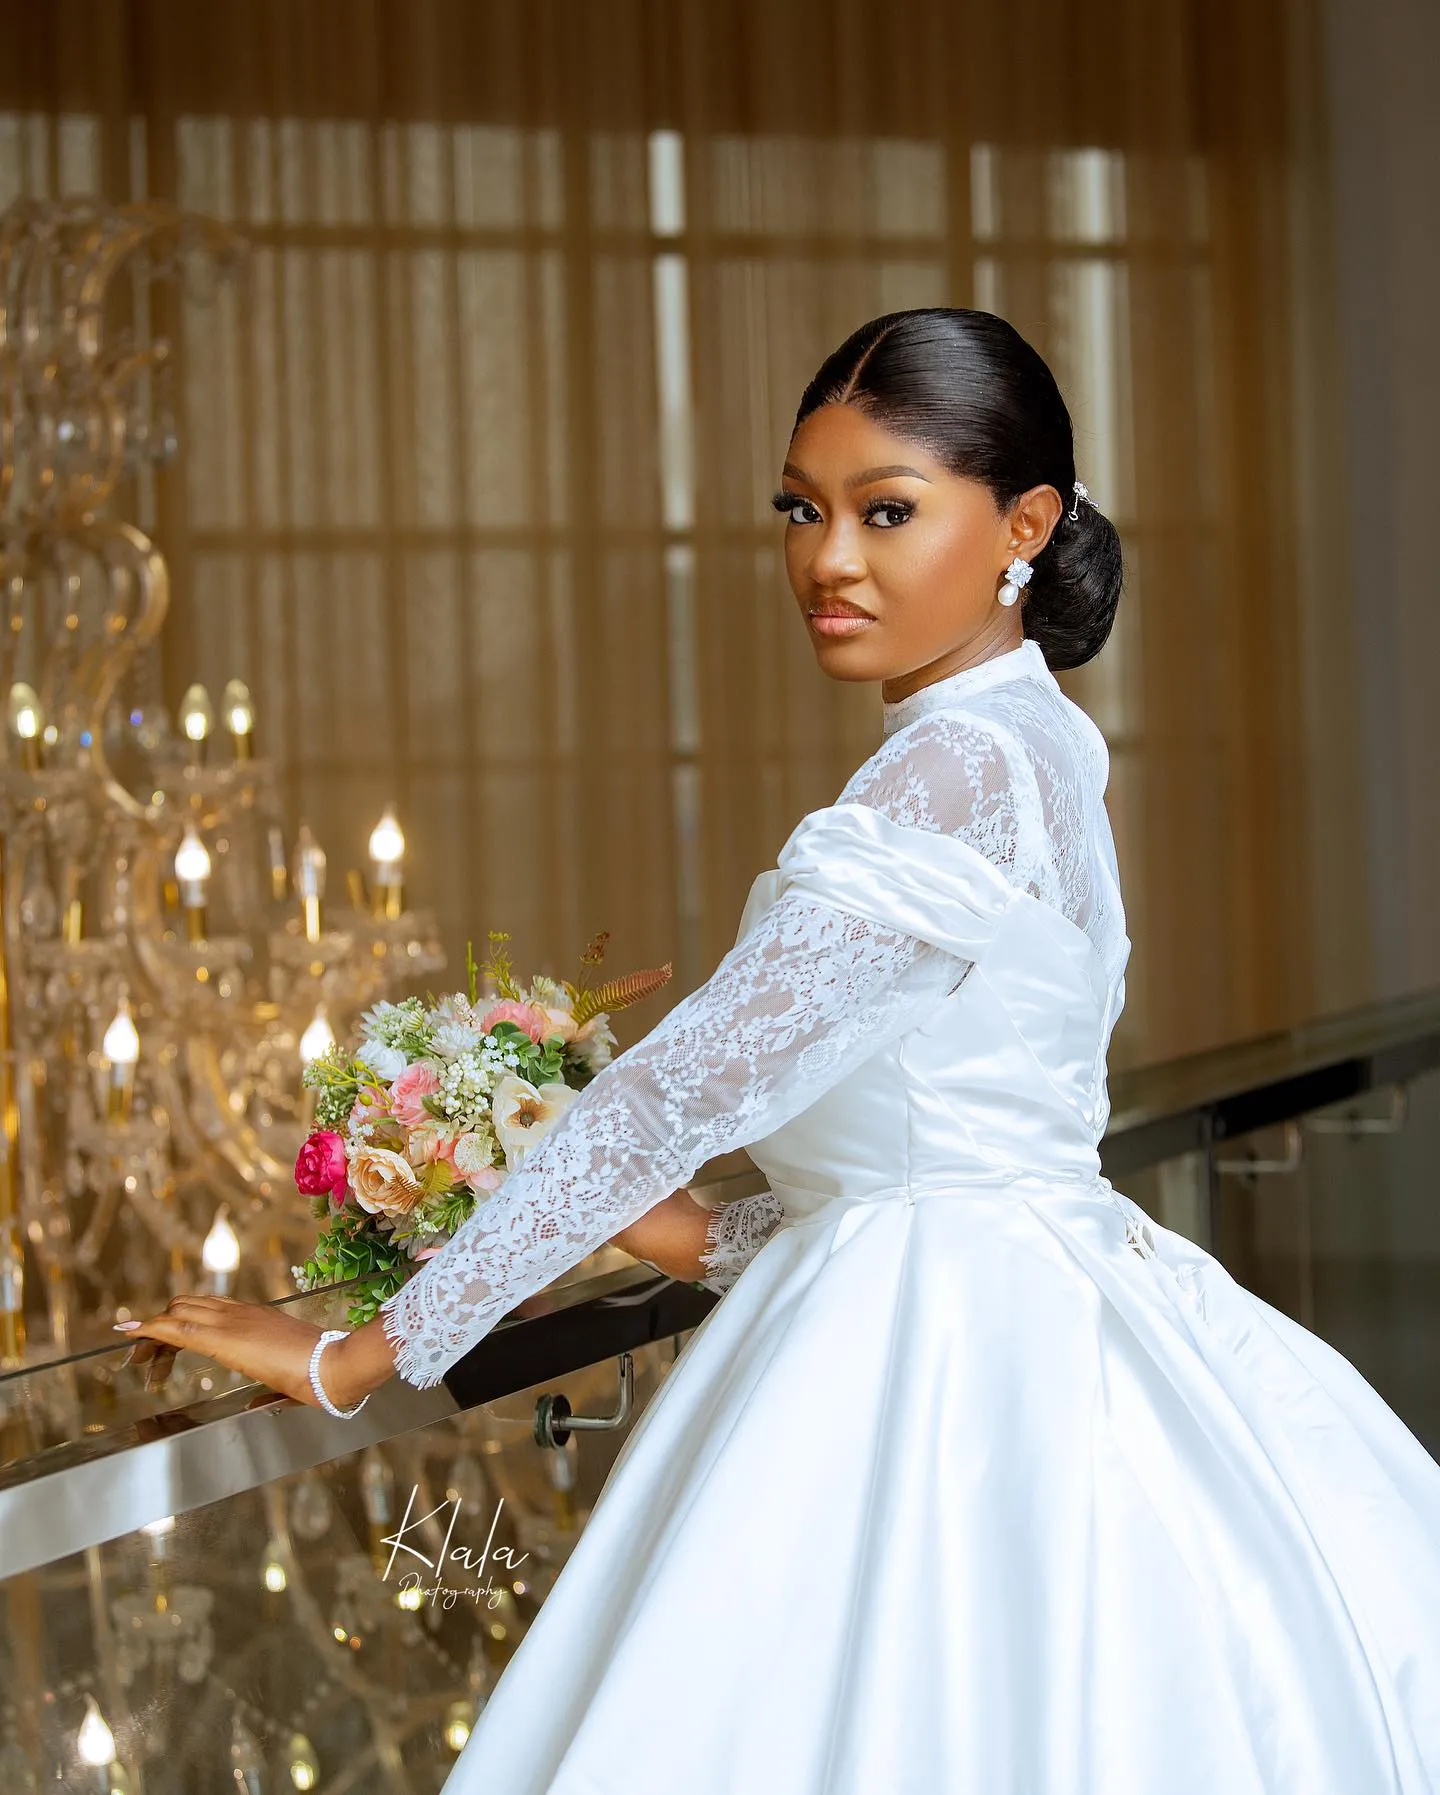 White Lace Ball Gown Wedding Dresses High Collar Long Sleeves Bridal Gown Sweep Train Satin Vestido de Novia for Bride